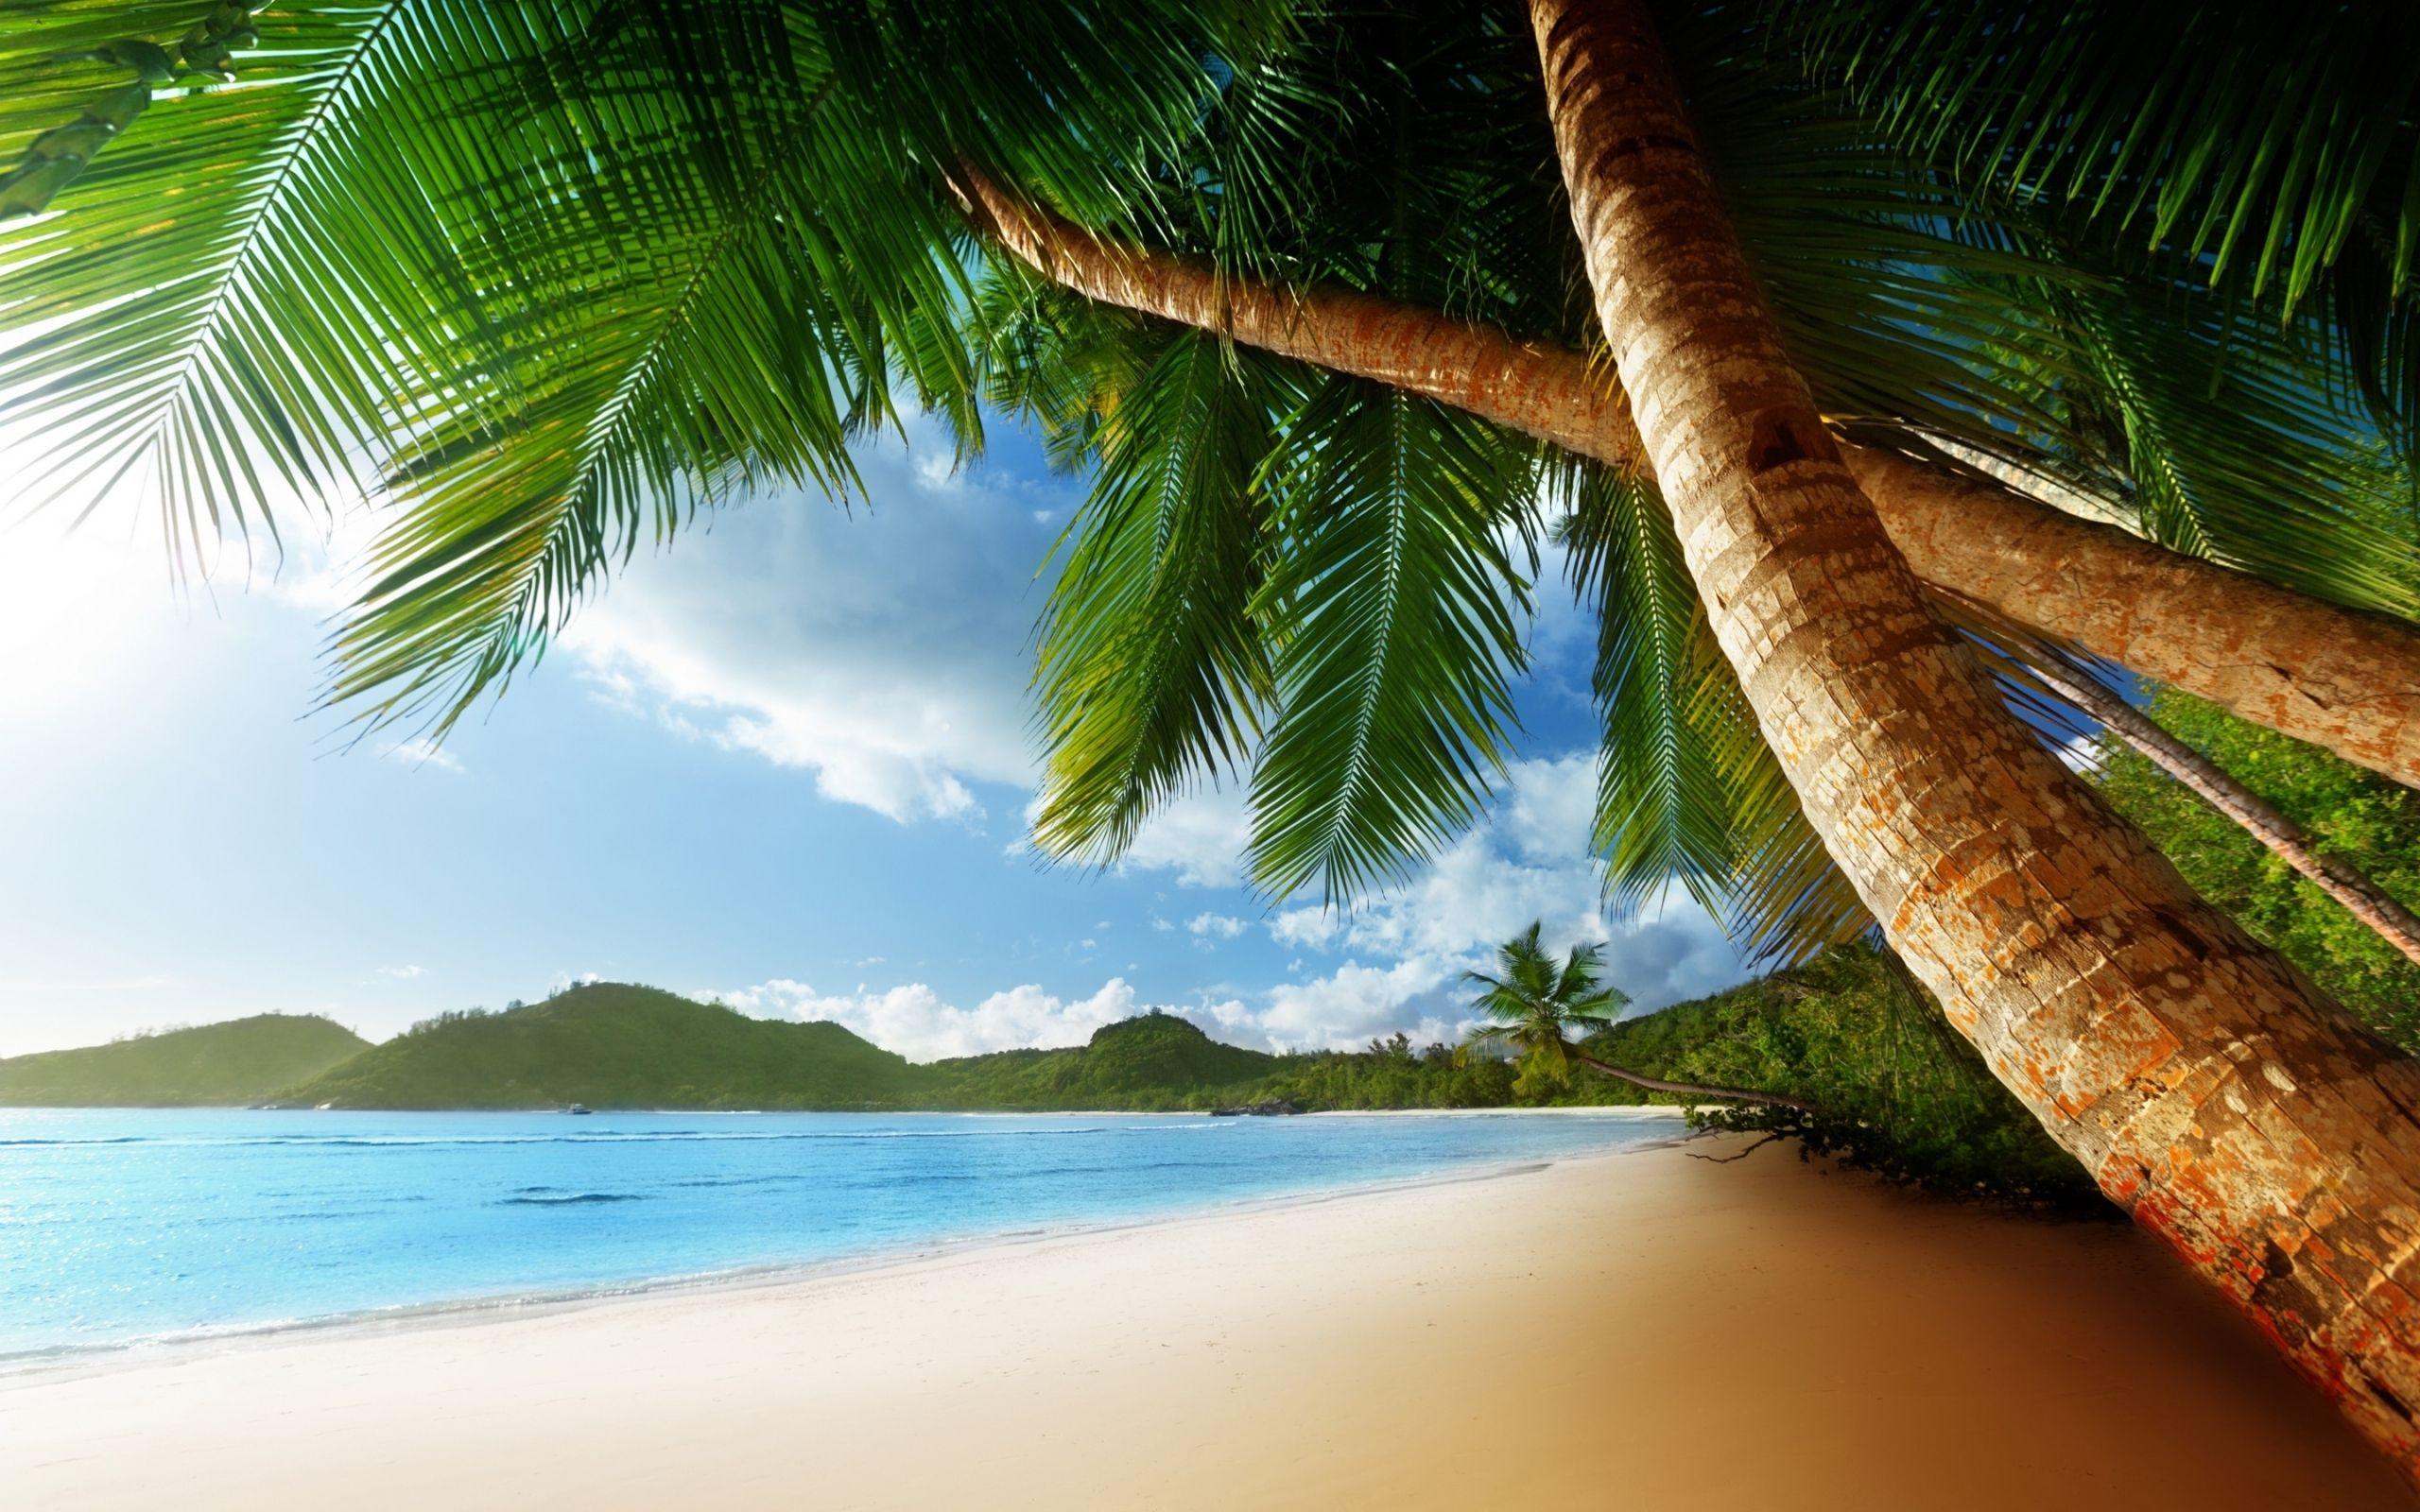 Exotic Island, Beach, Palm Trees, Ocean widescreen wallpaper. Wide